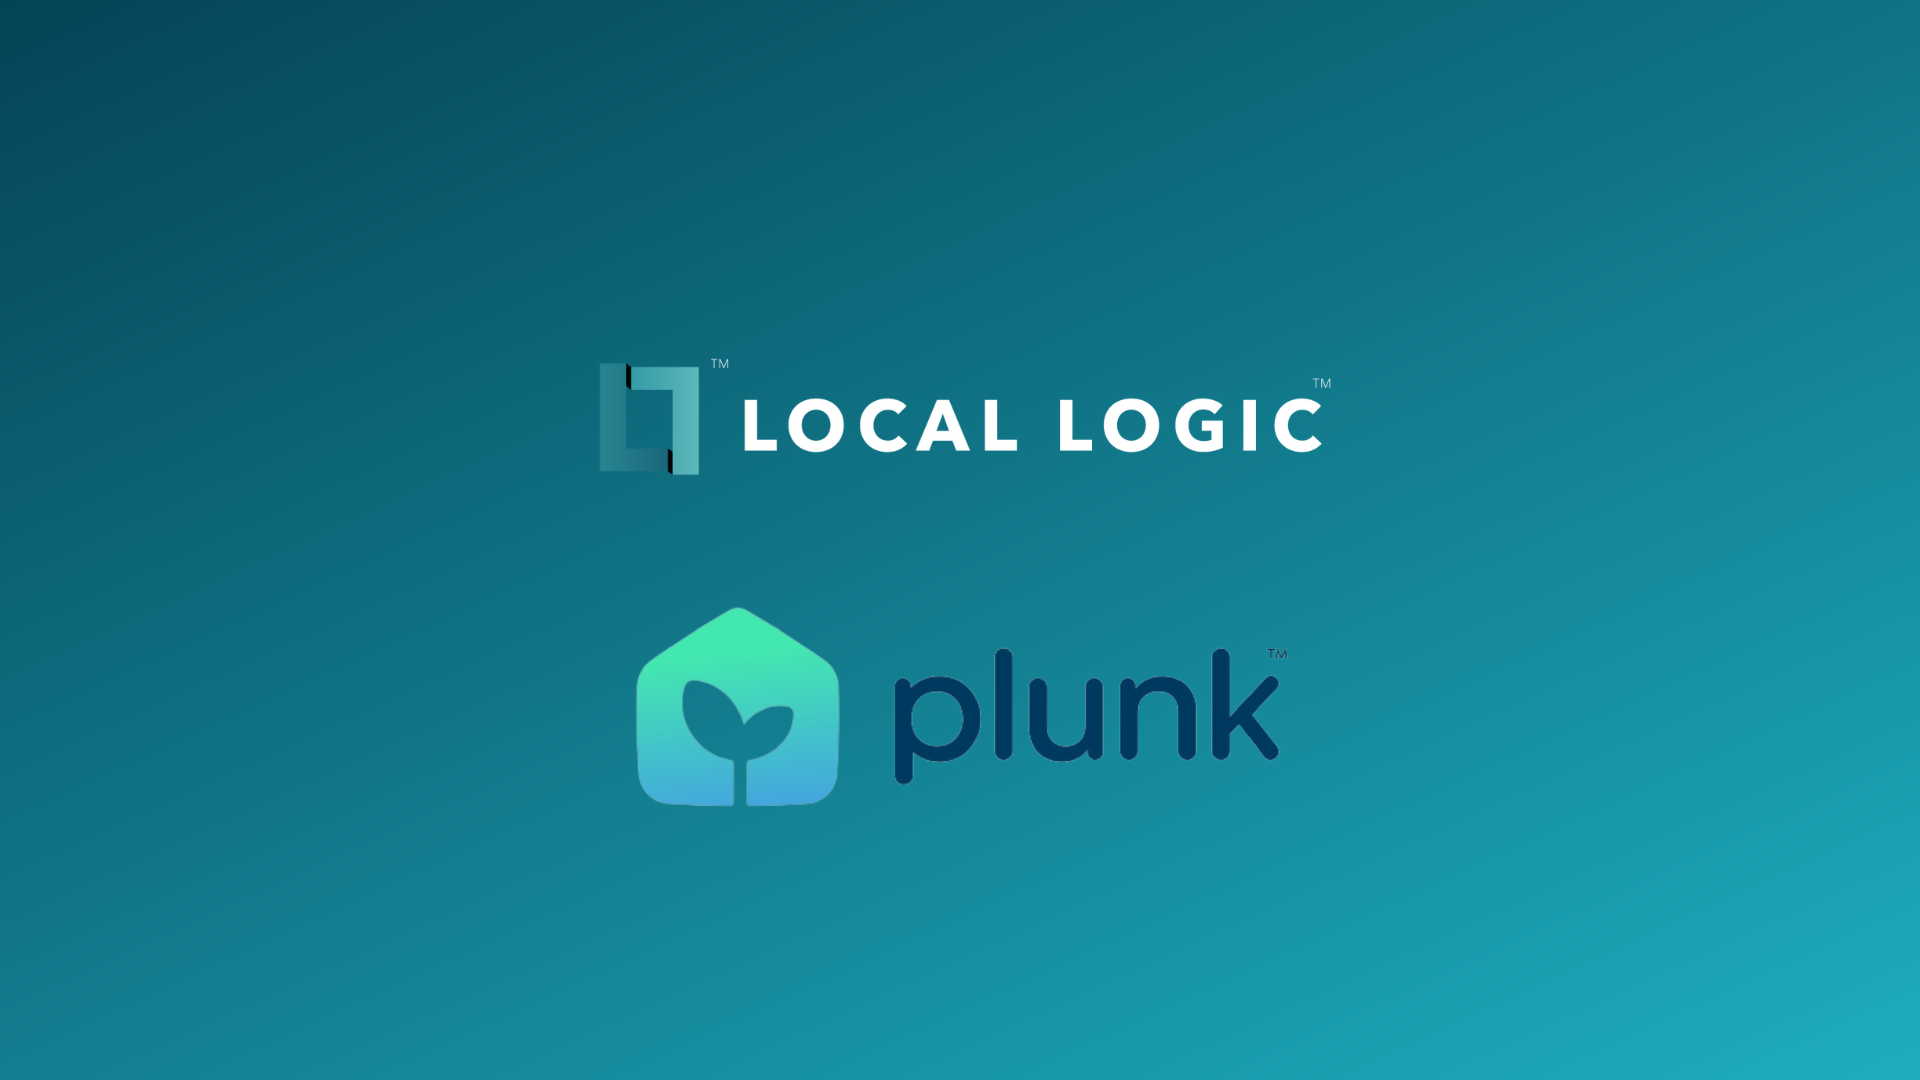 Local Logic logo and Plunk logo to announce partnership